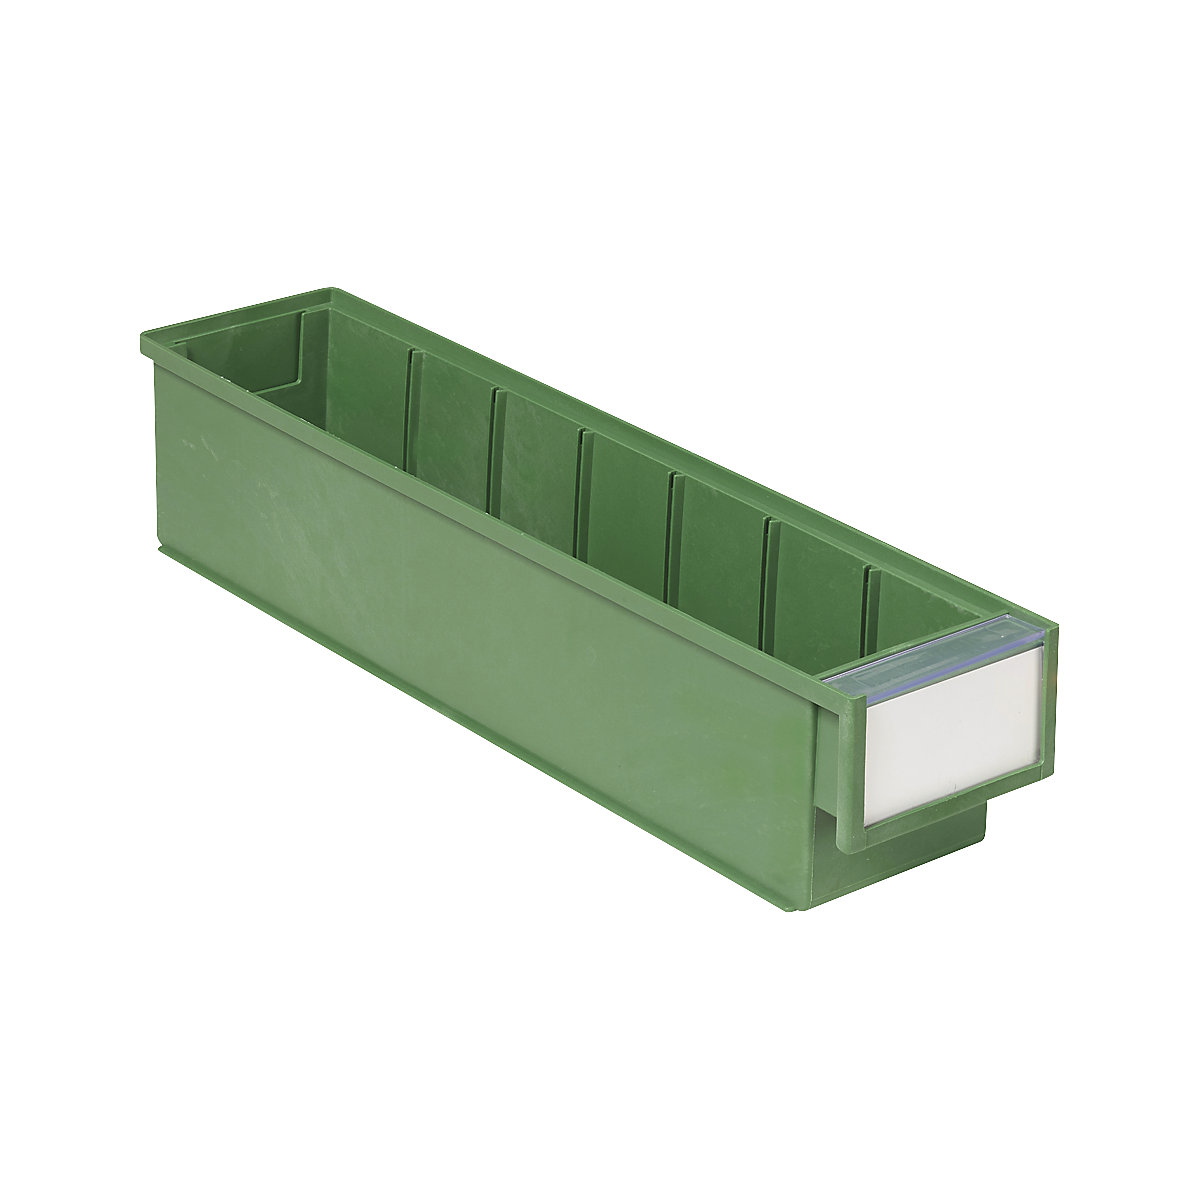 Caixa para estante BiOX – Treston, verde, CxLxA 400 x 90 x 82 mm, embalagem de 30 unid.-2